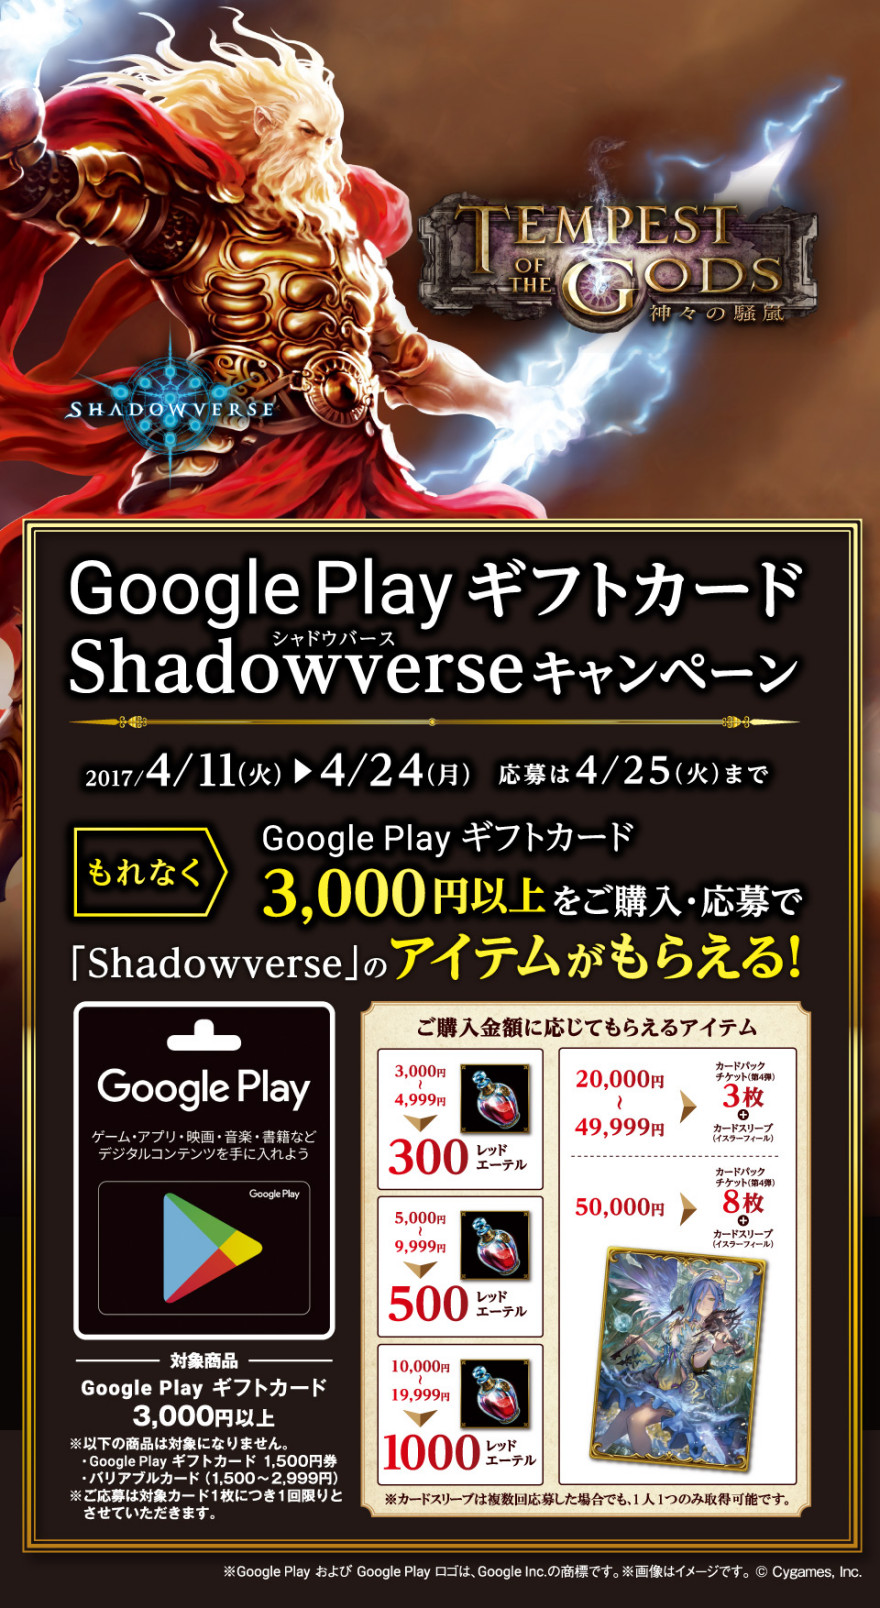 Google Play ギフトカード シャドウバースキャンペーン お知らせ バリューアディッド ジャパン株式会社